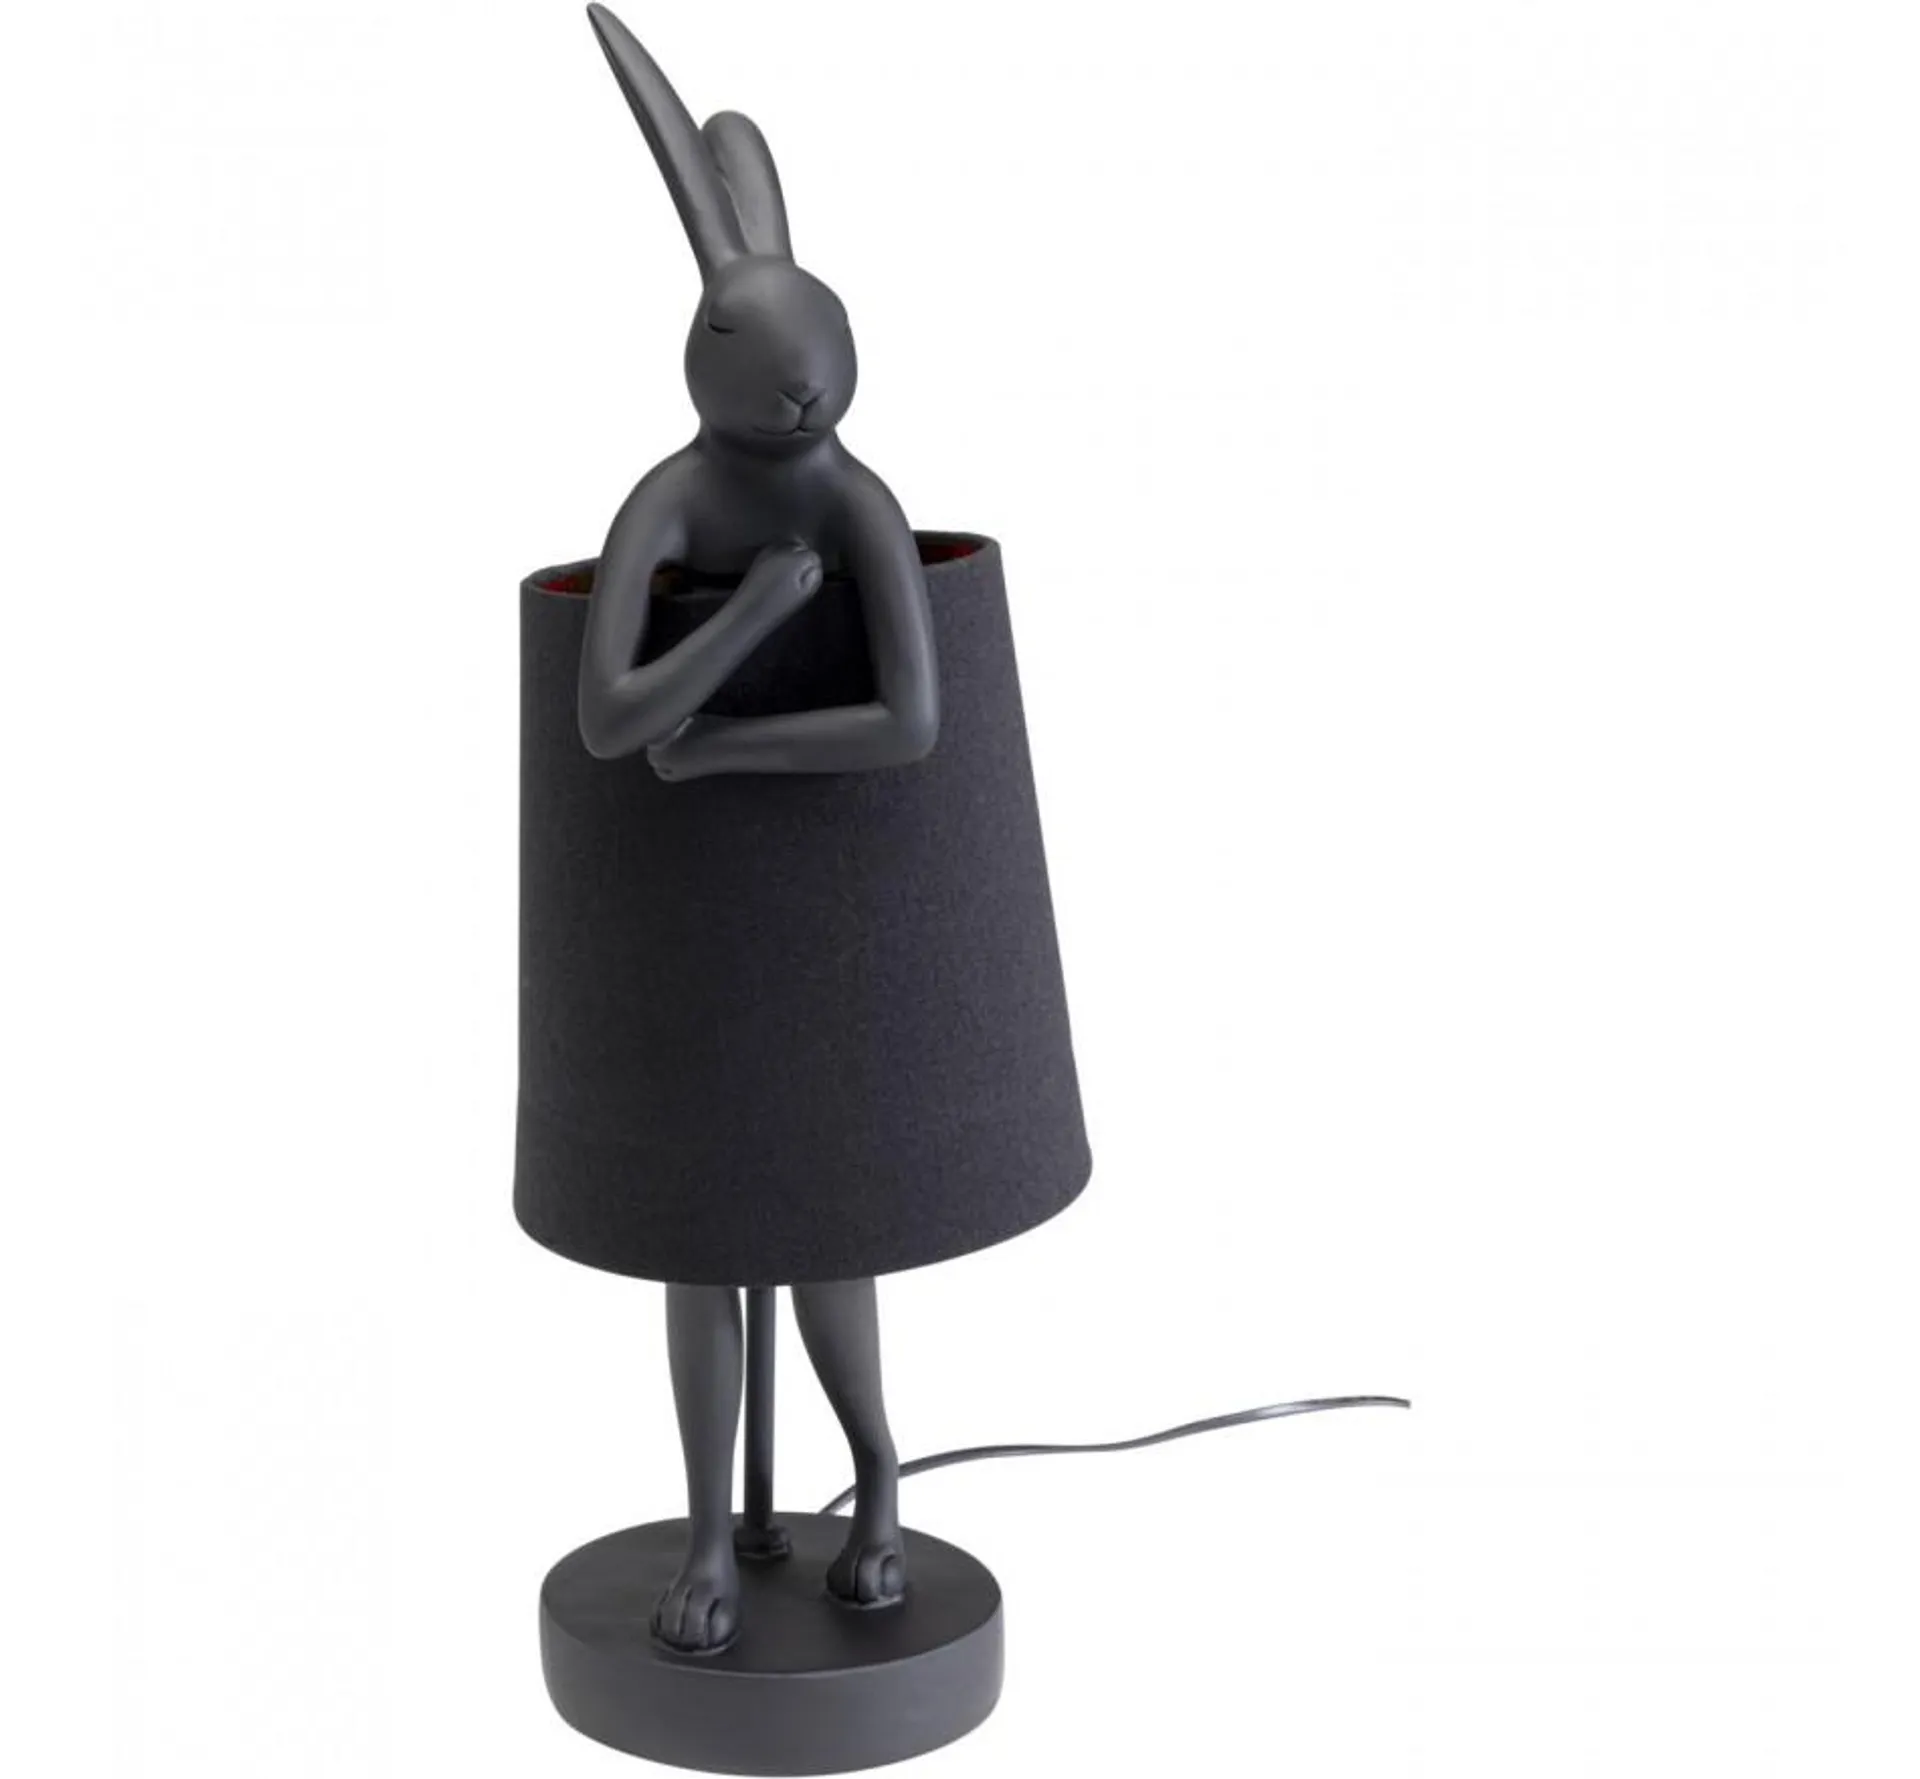 Lampe Animal Lapin noire 50cm doré Kare Design